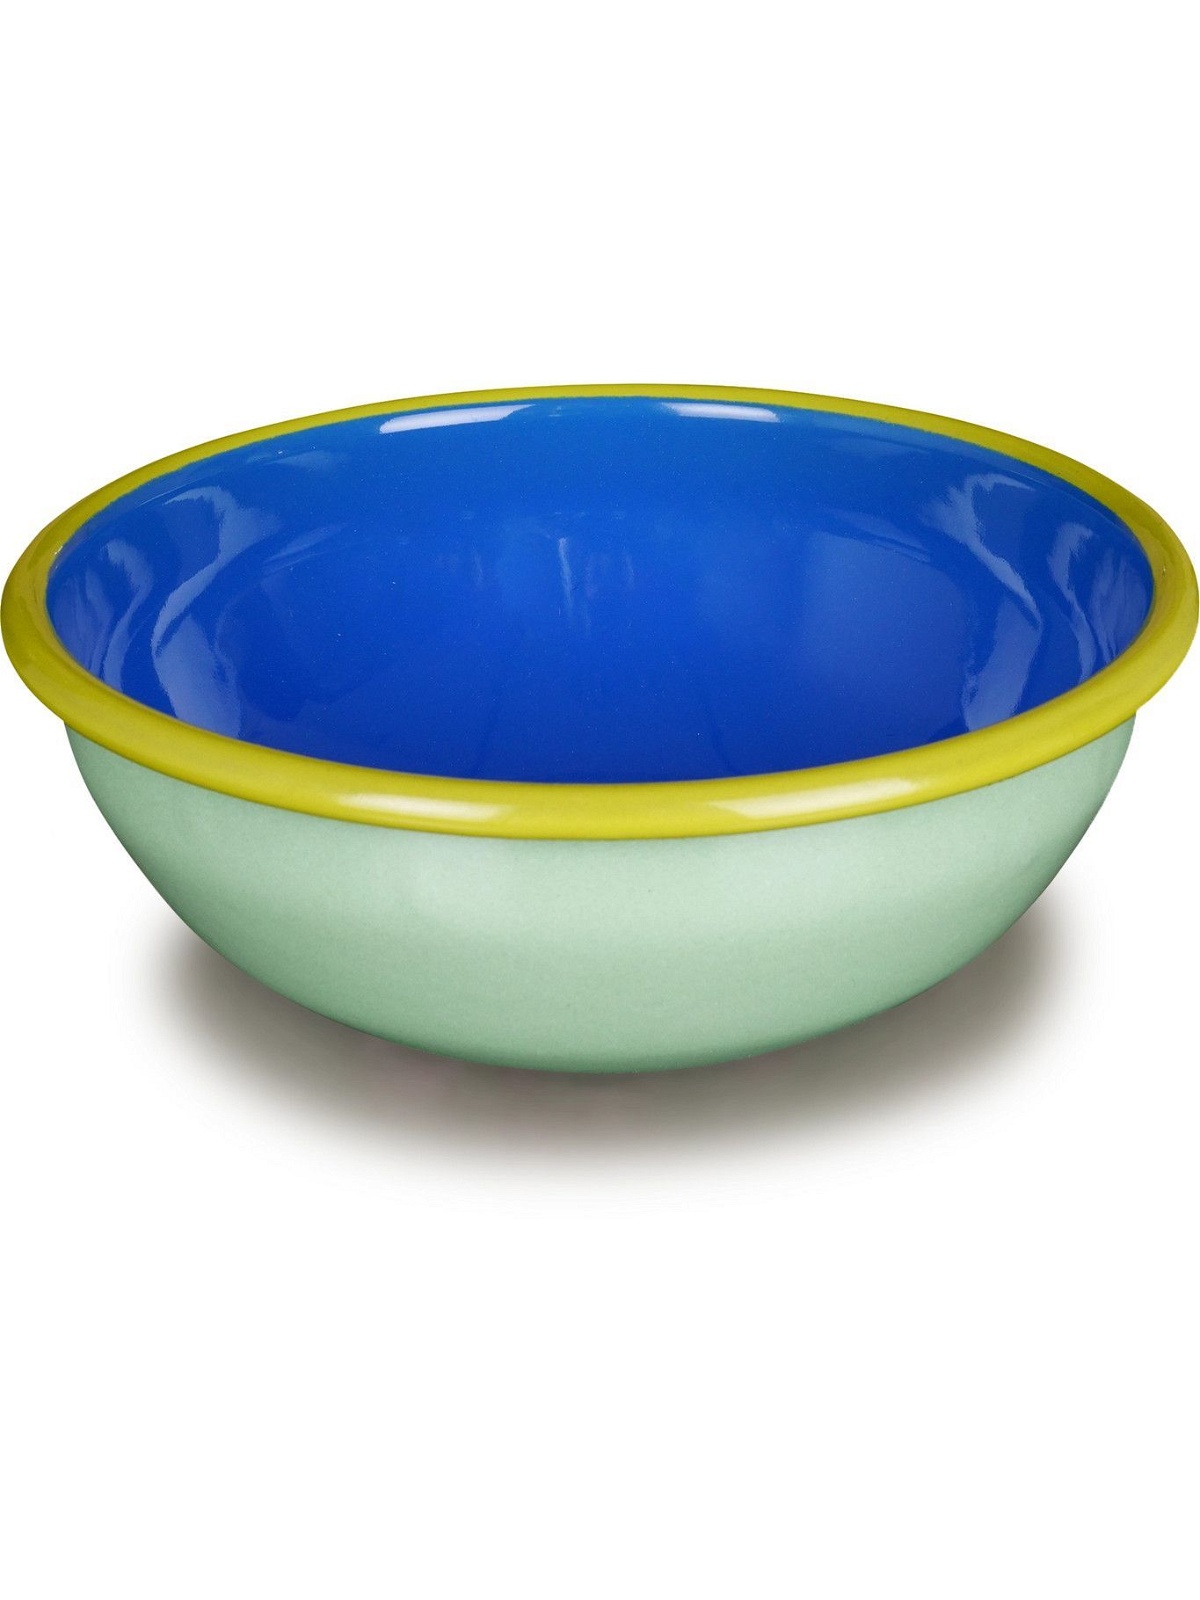 BORNN - Colorama Enamelware Bowl, 16cm